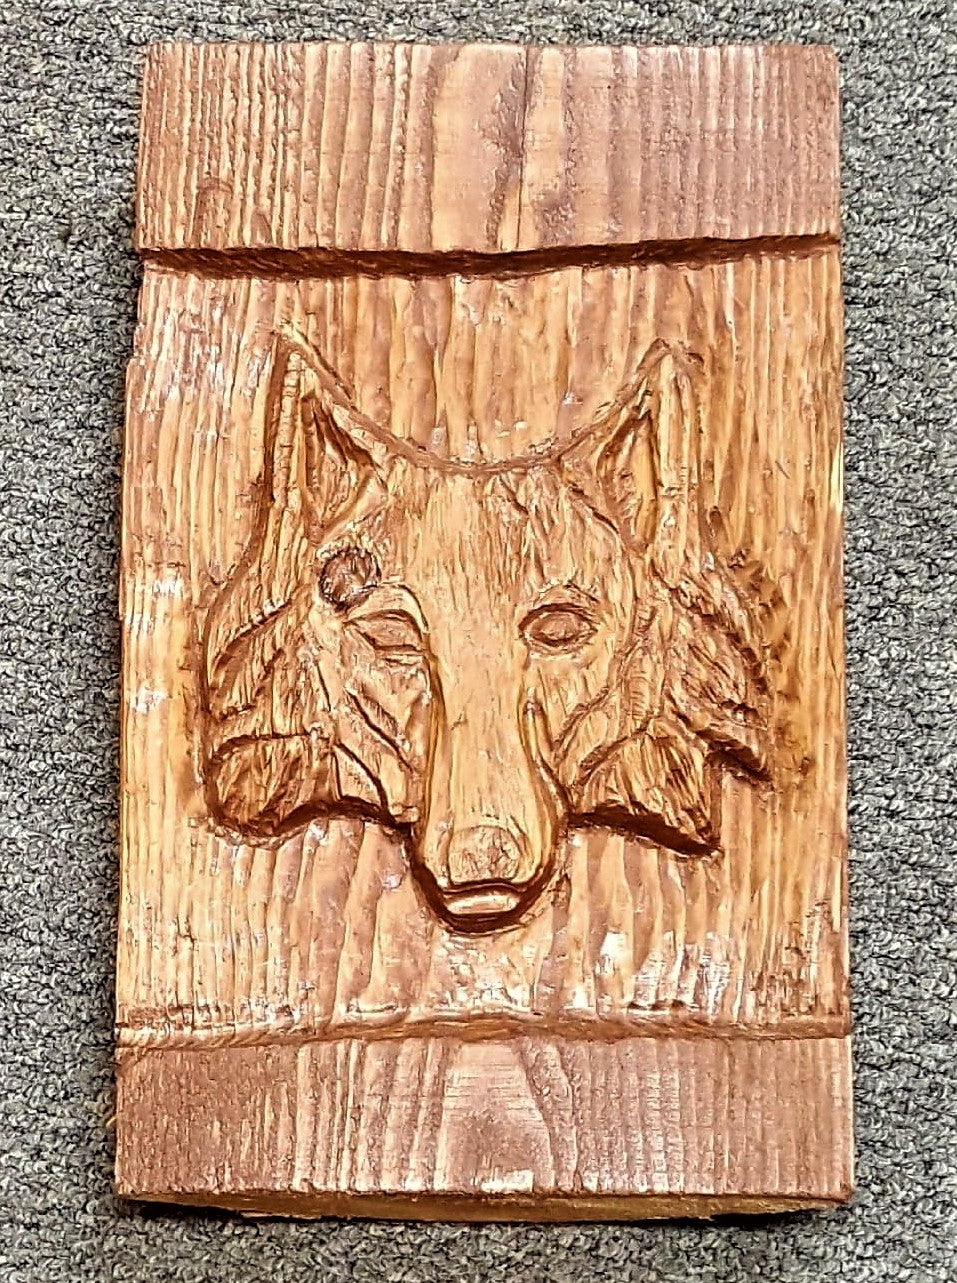 Wood Carving, medium